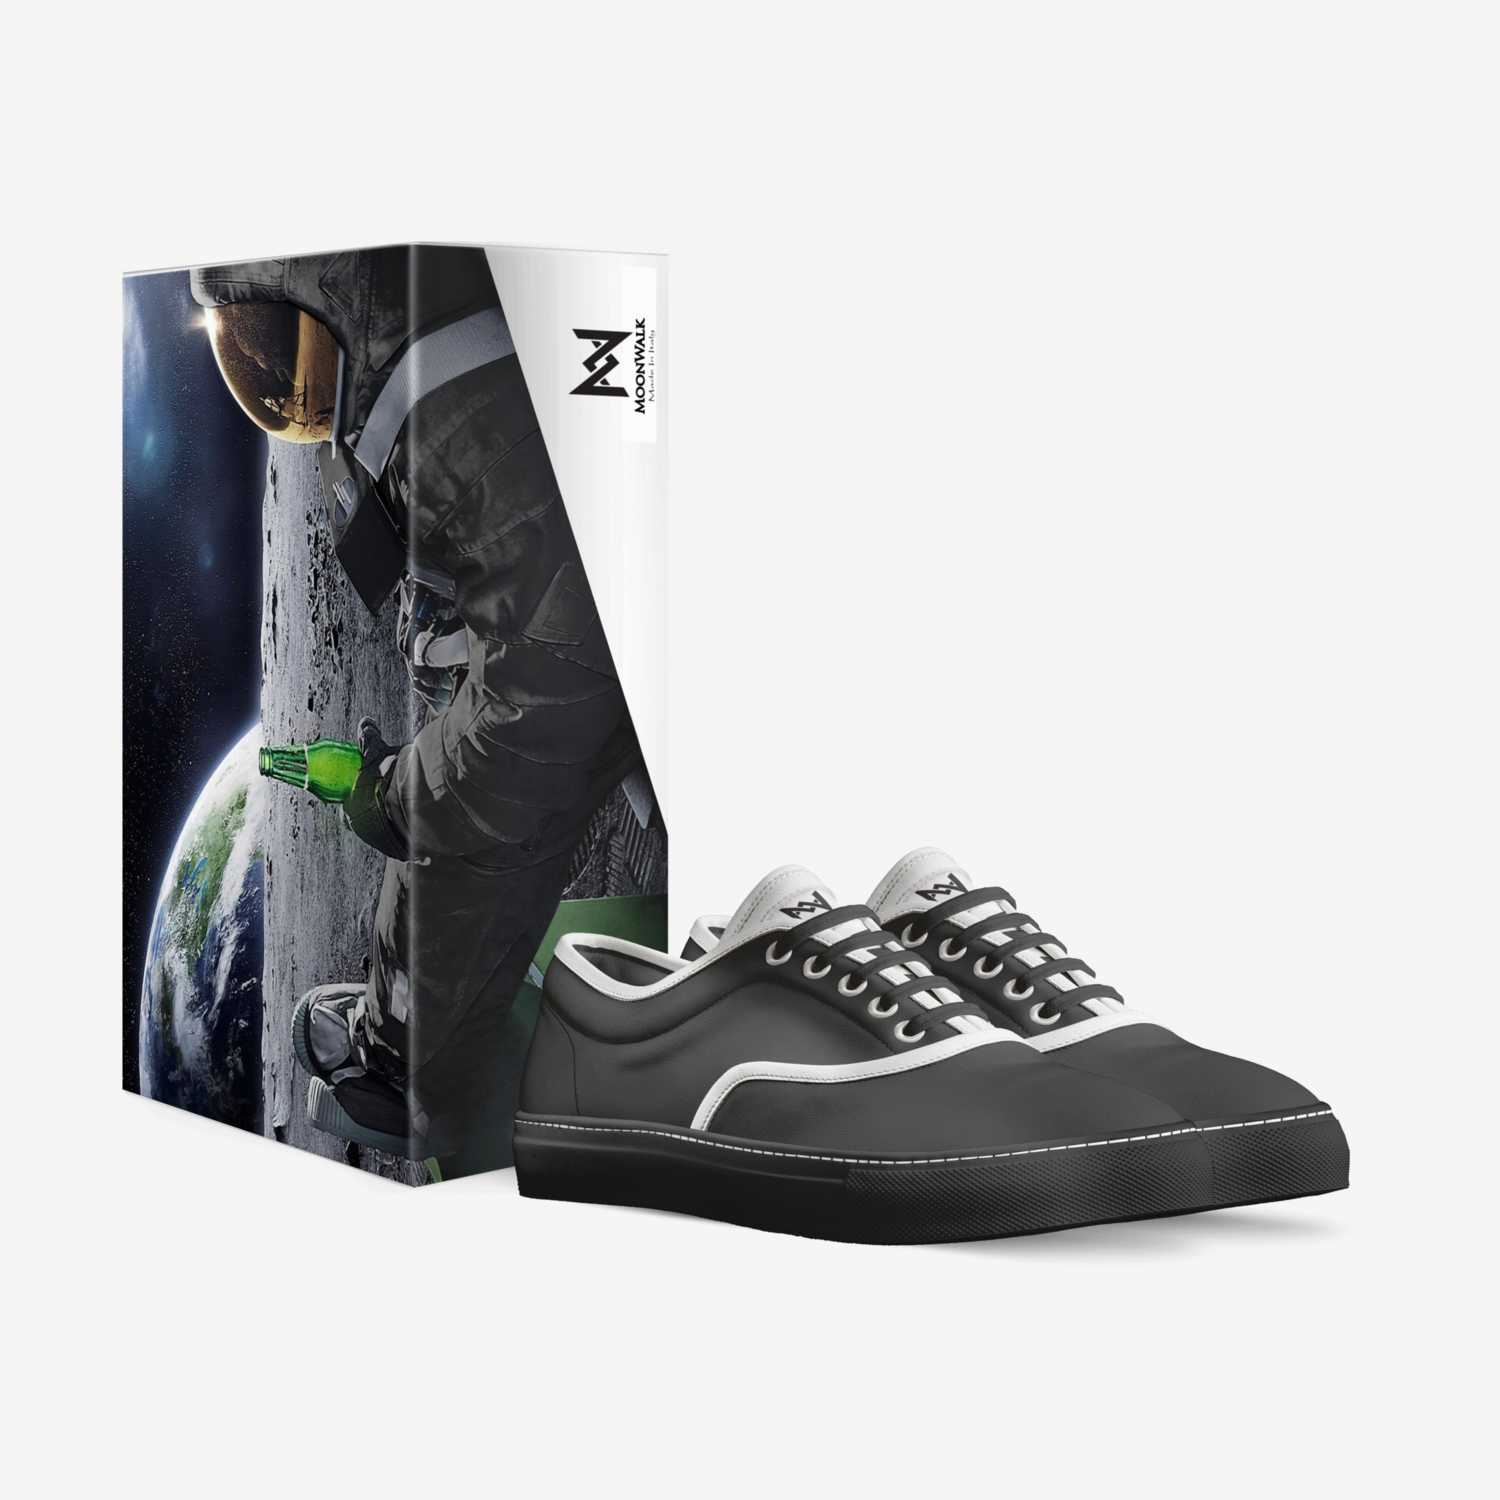 CruzControl custom made in Italy shoes by Ryan Cruz | Box view